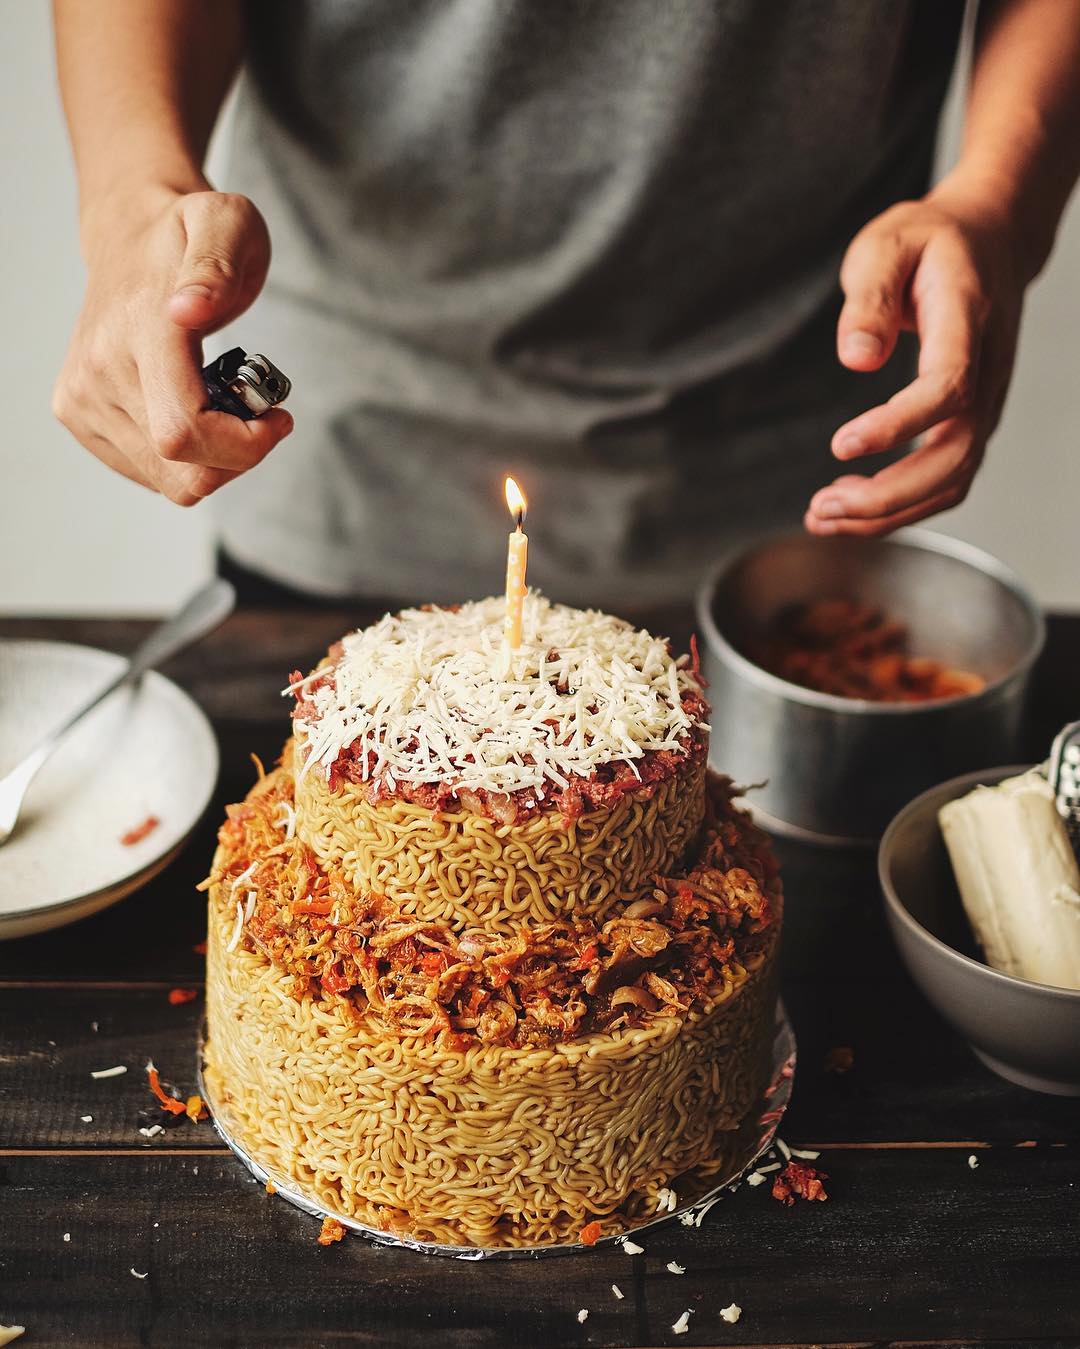 Kue ulang tahun unik dengan taburan keju di atasnya (Sumber: Instagram).